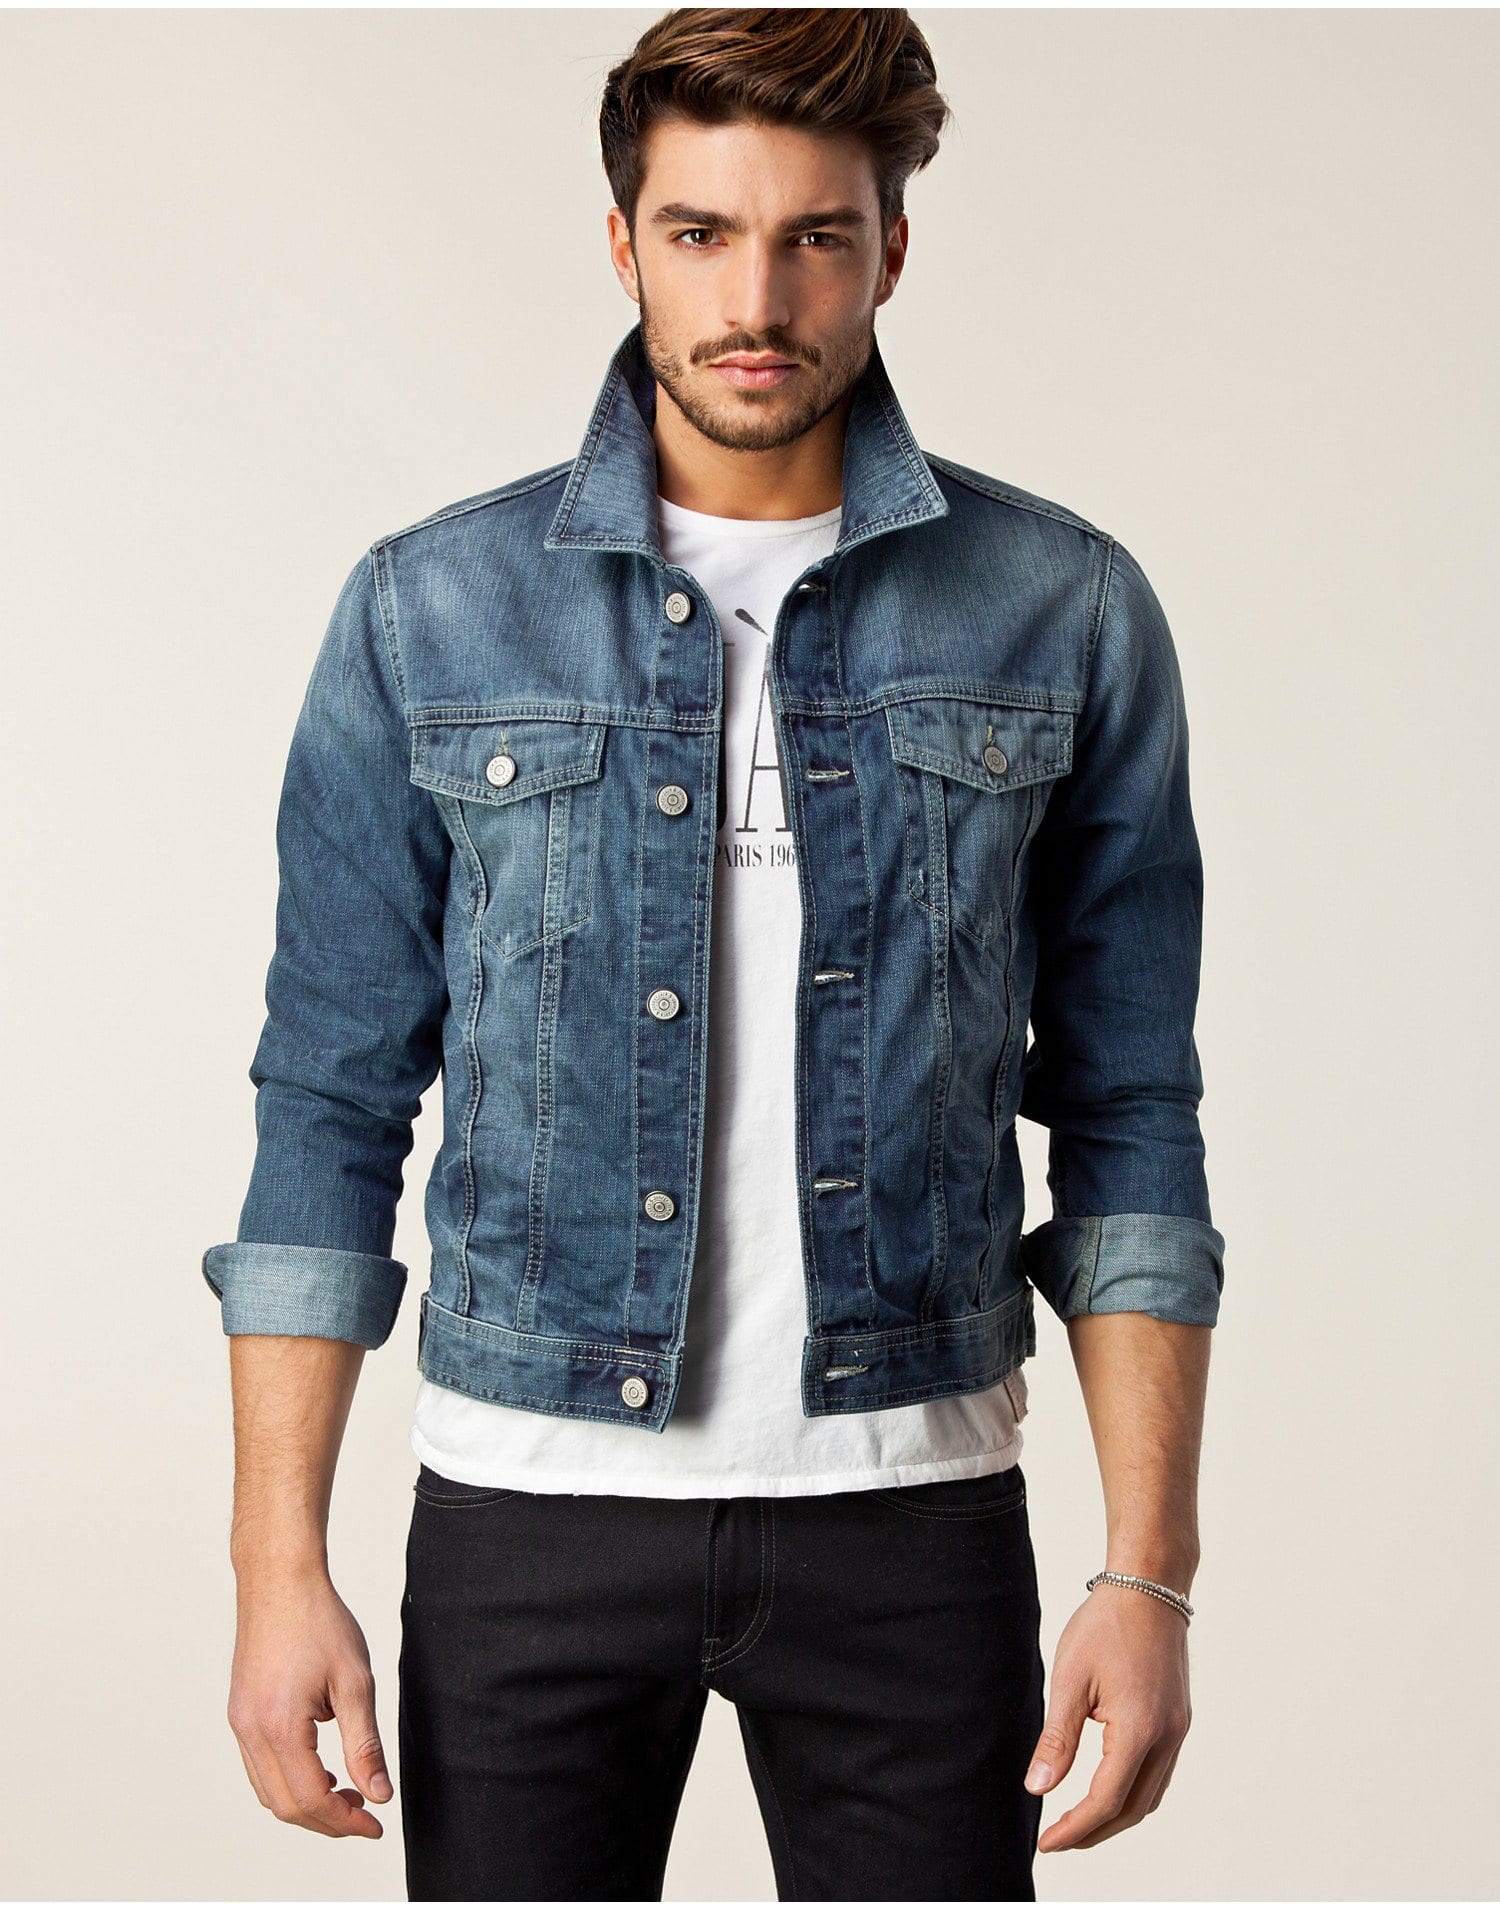 Denim Jackets Outfits For Men – 17 Ways To Wear Denim Jacket